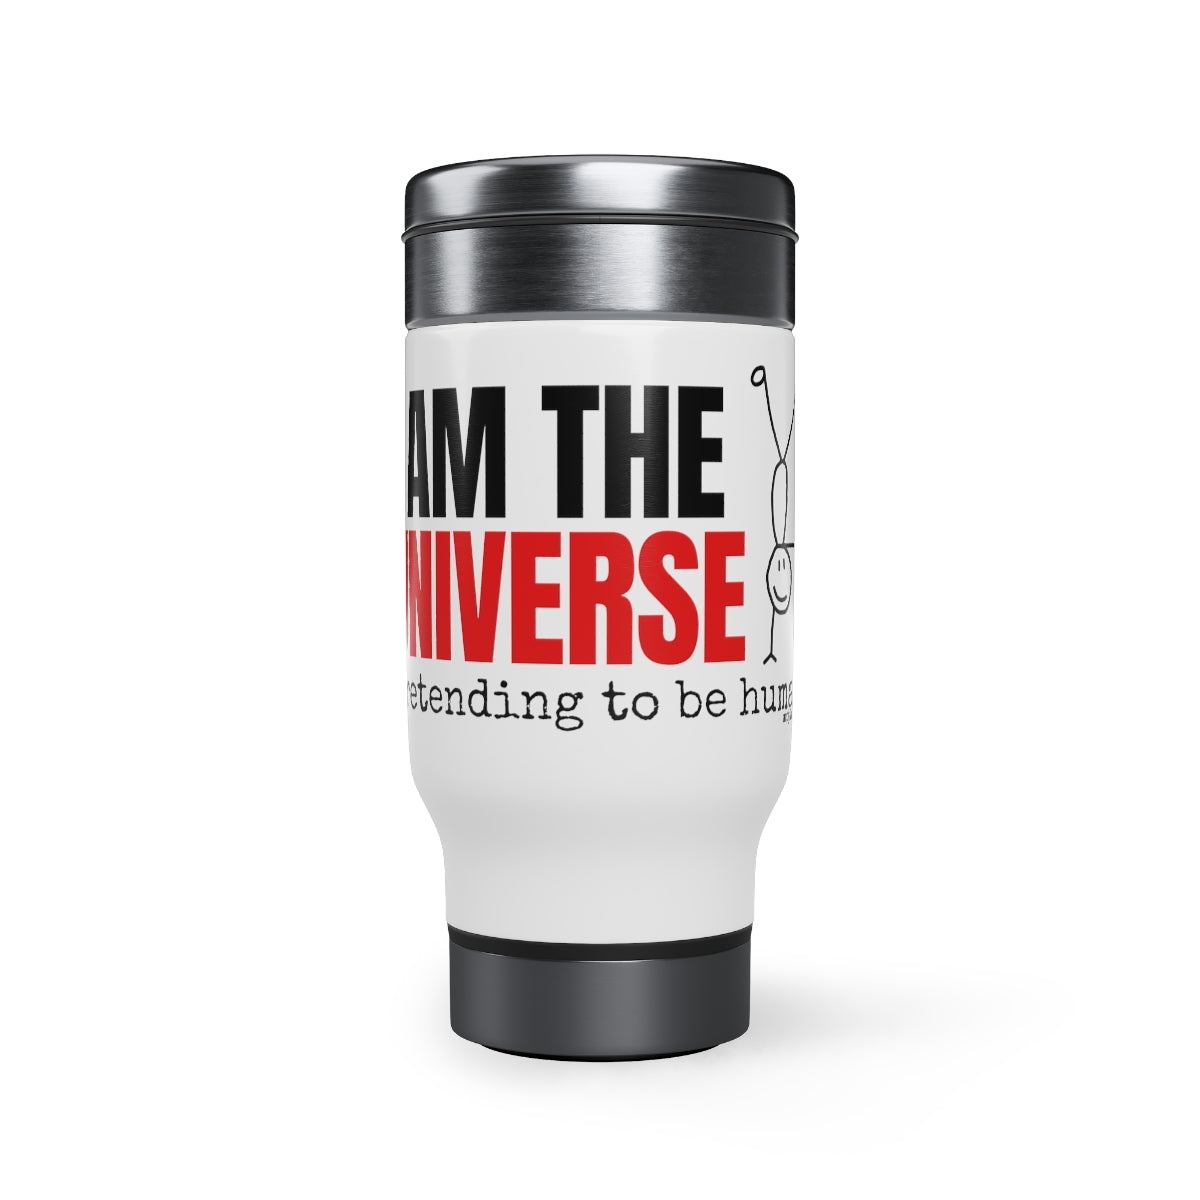 I Am Universe. Travel Mug 14oz